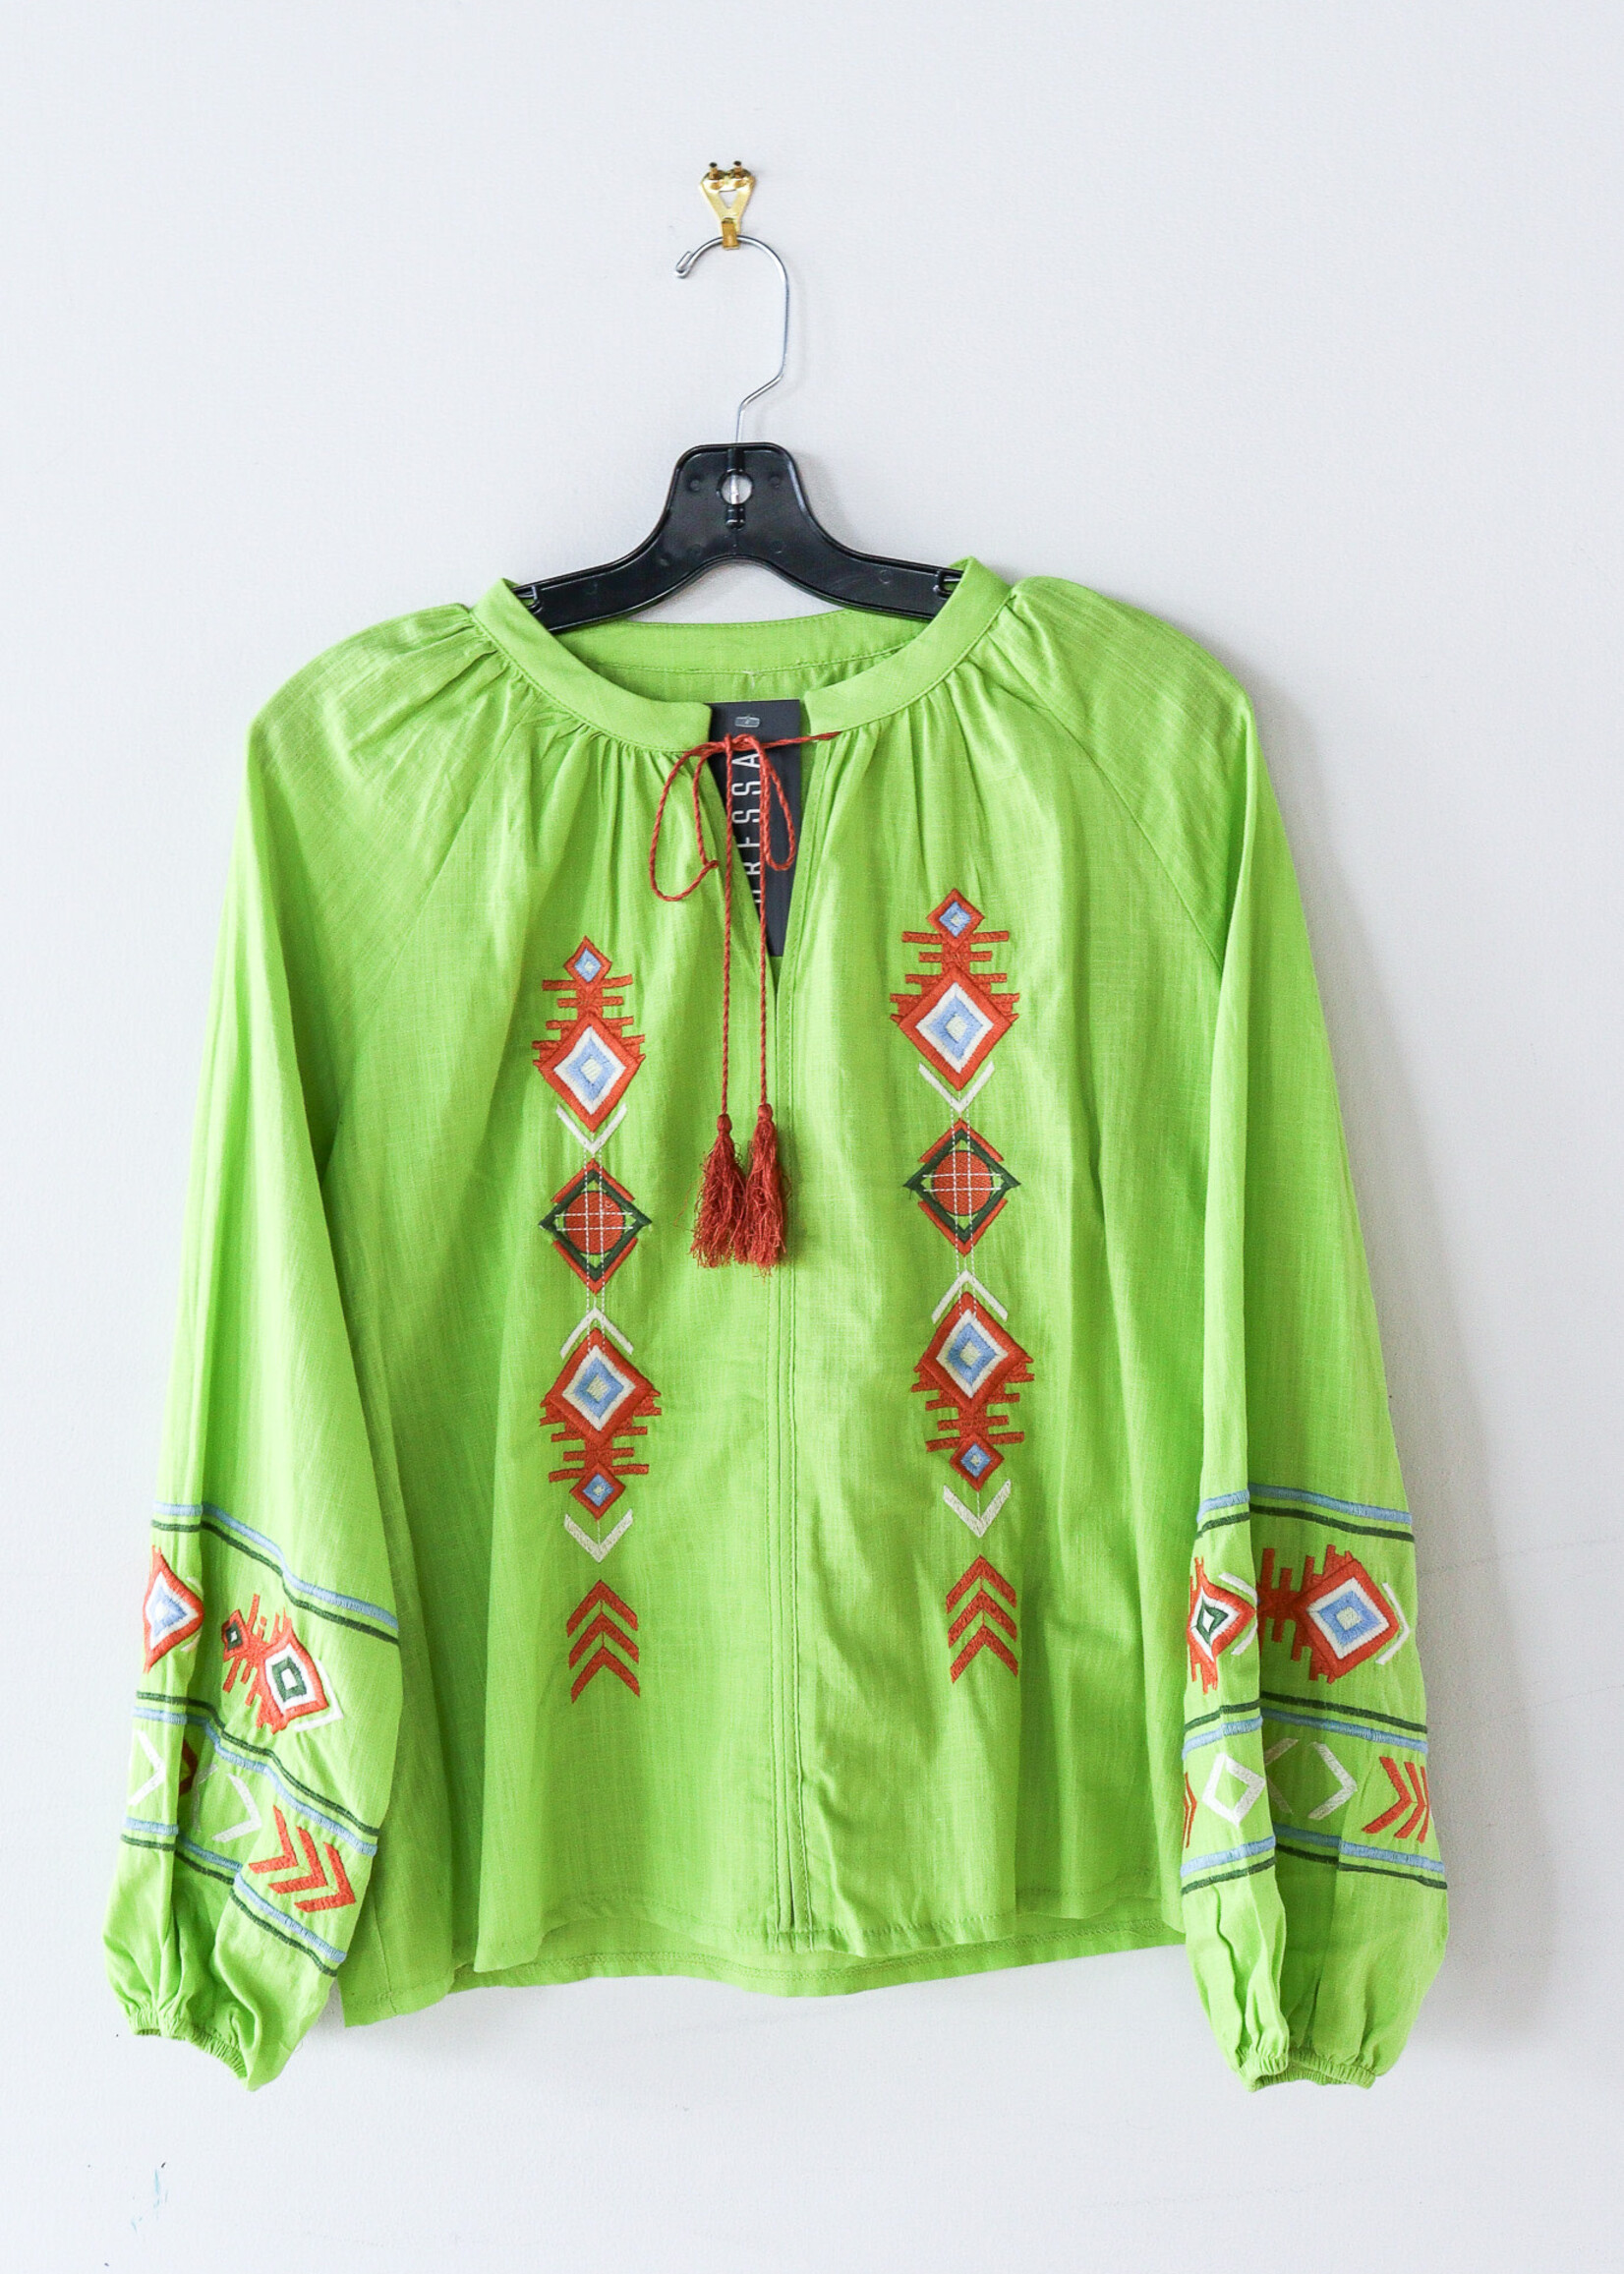 APPAREL - (W) Blouse, (Medium) Lime Green, Green Orange, Blue White Embroidery by Dressa, Ukraine